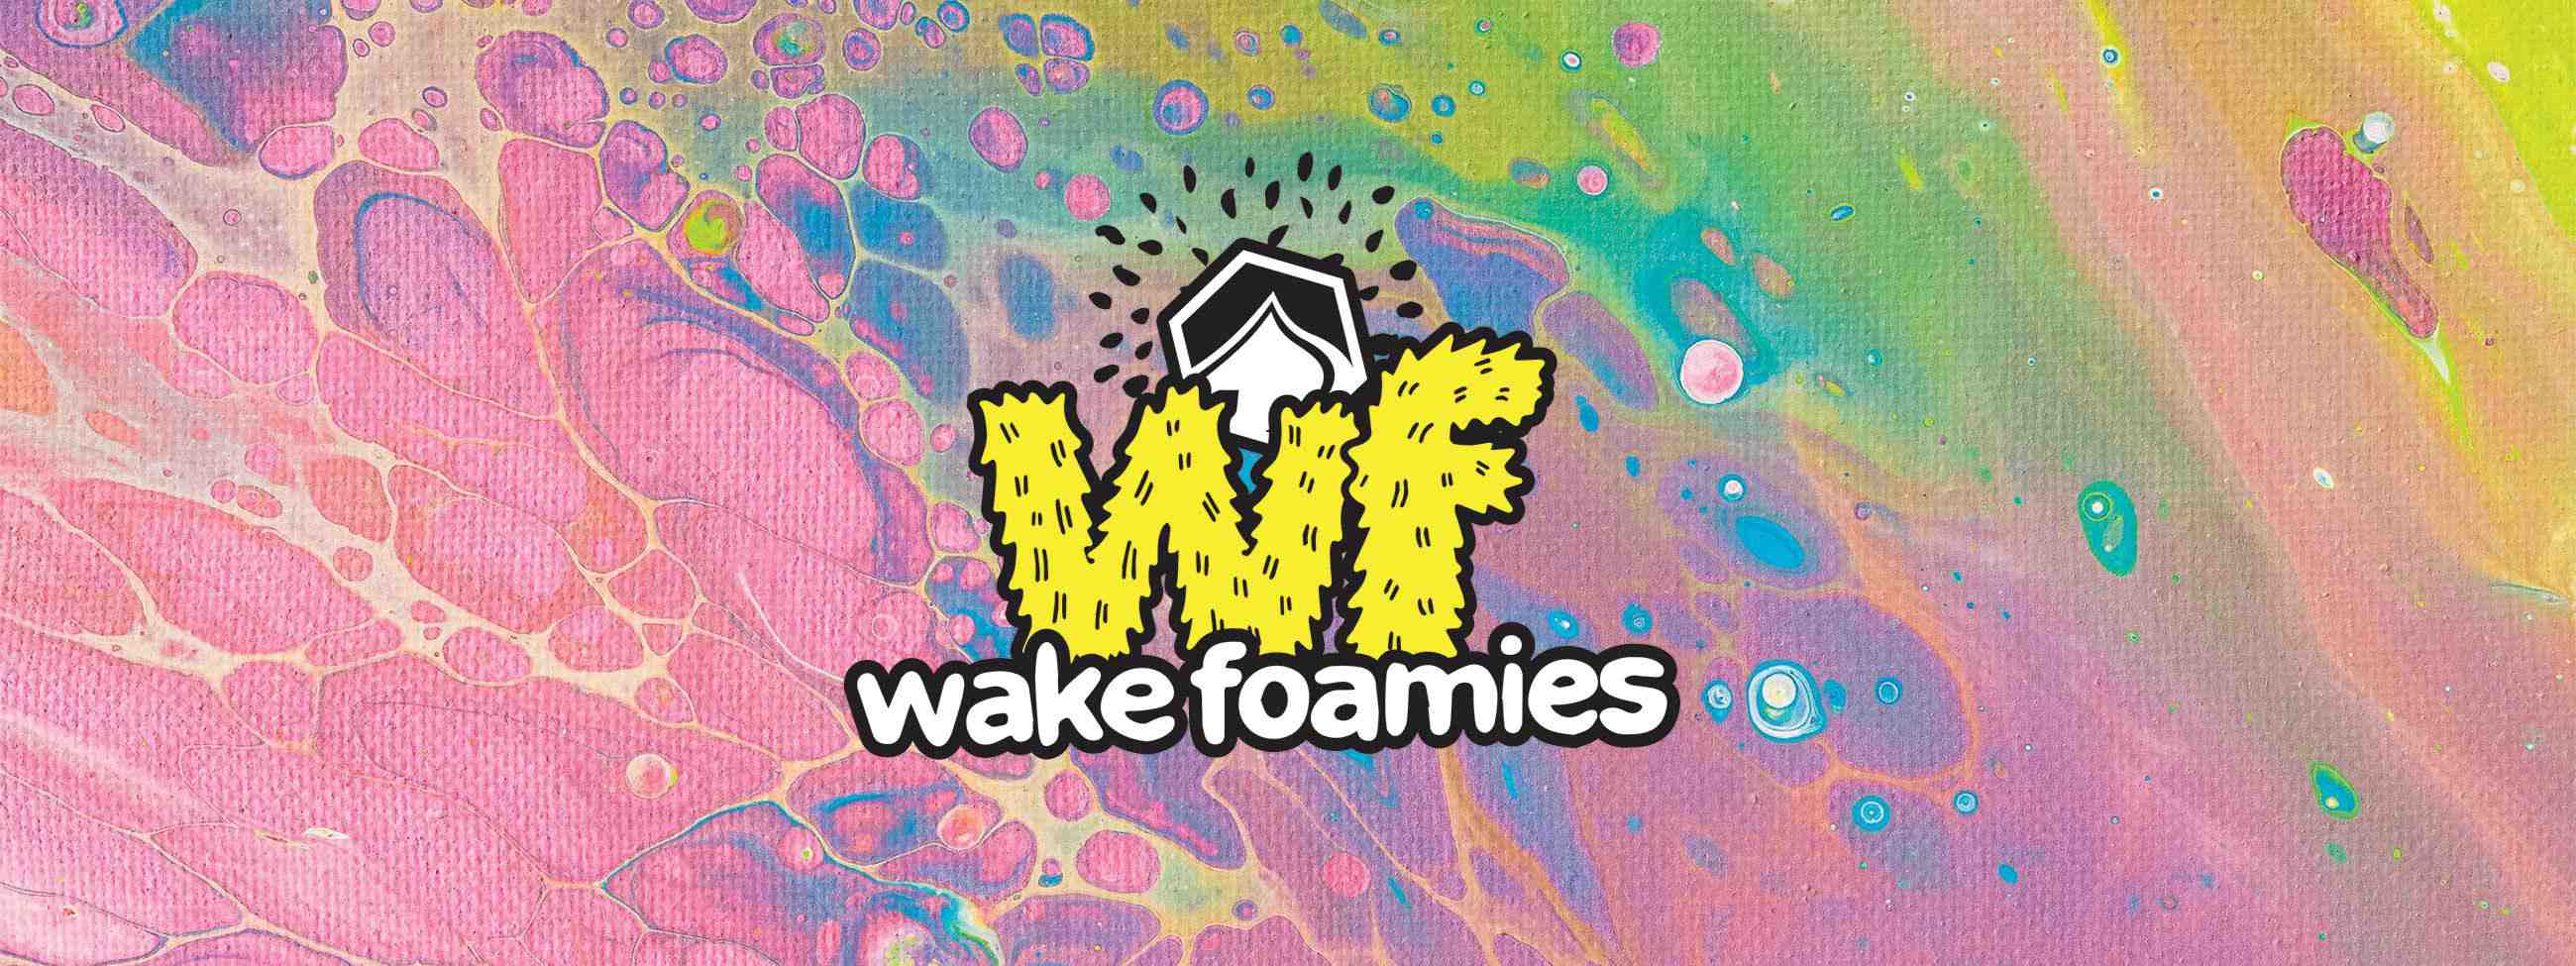 Wakefoamies Wakesurfer